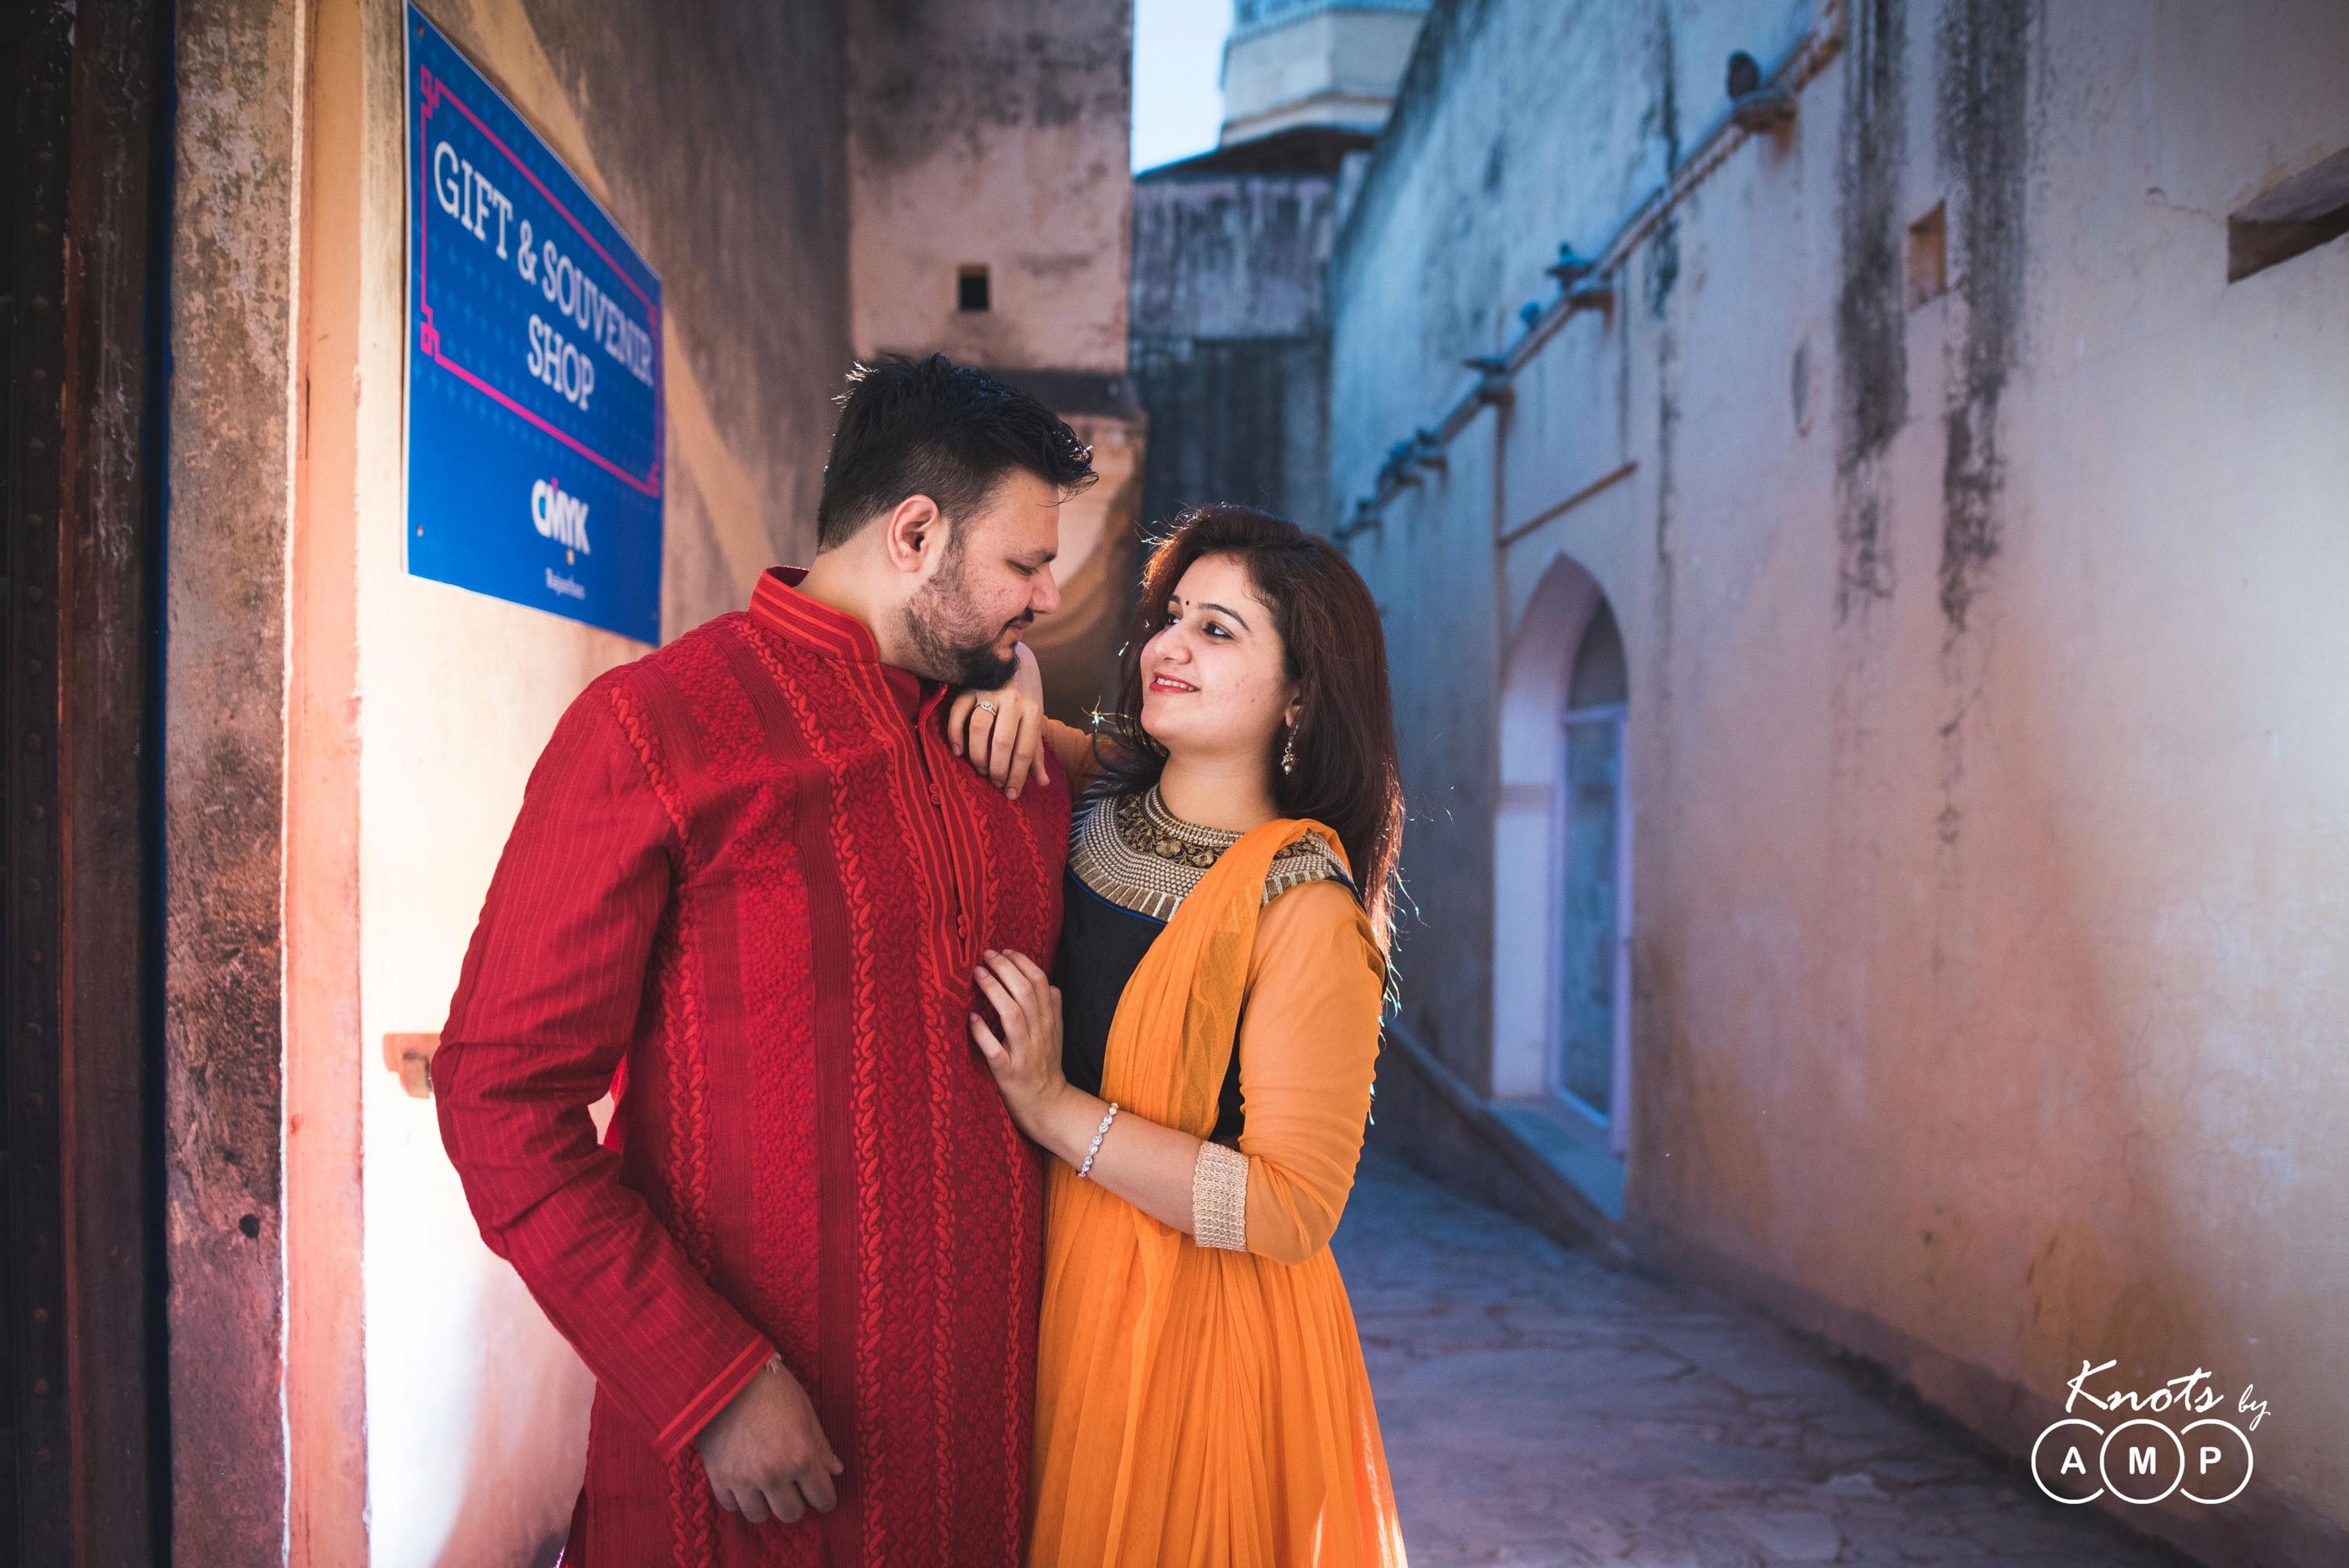 Couple Shoot In Jaipur Best Wedding Photographers In India Knotsbyamp 5888